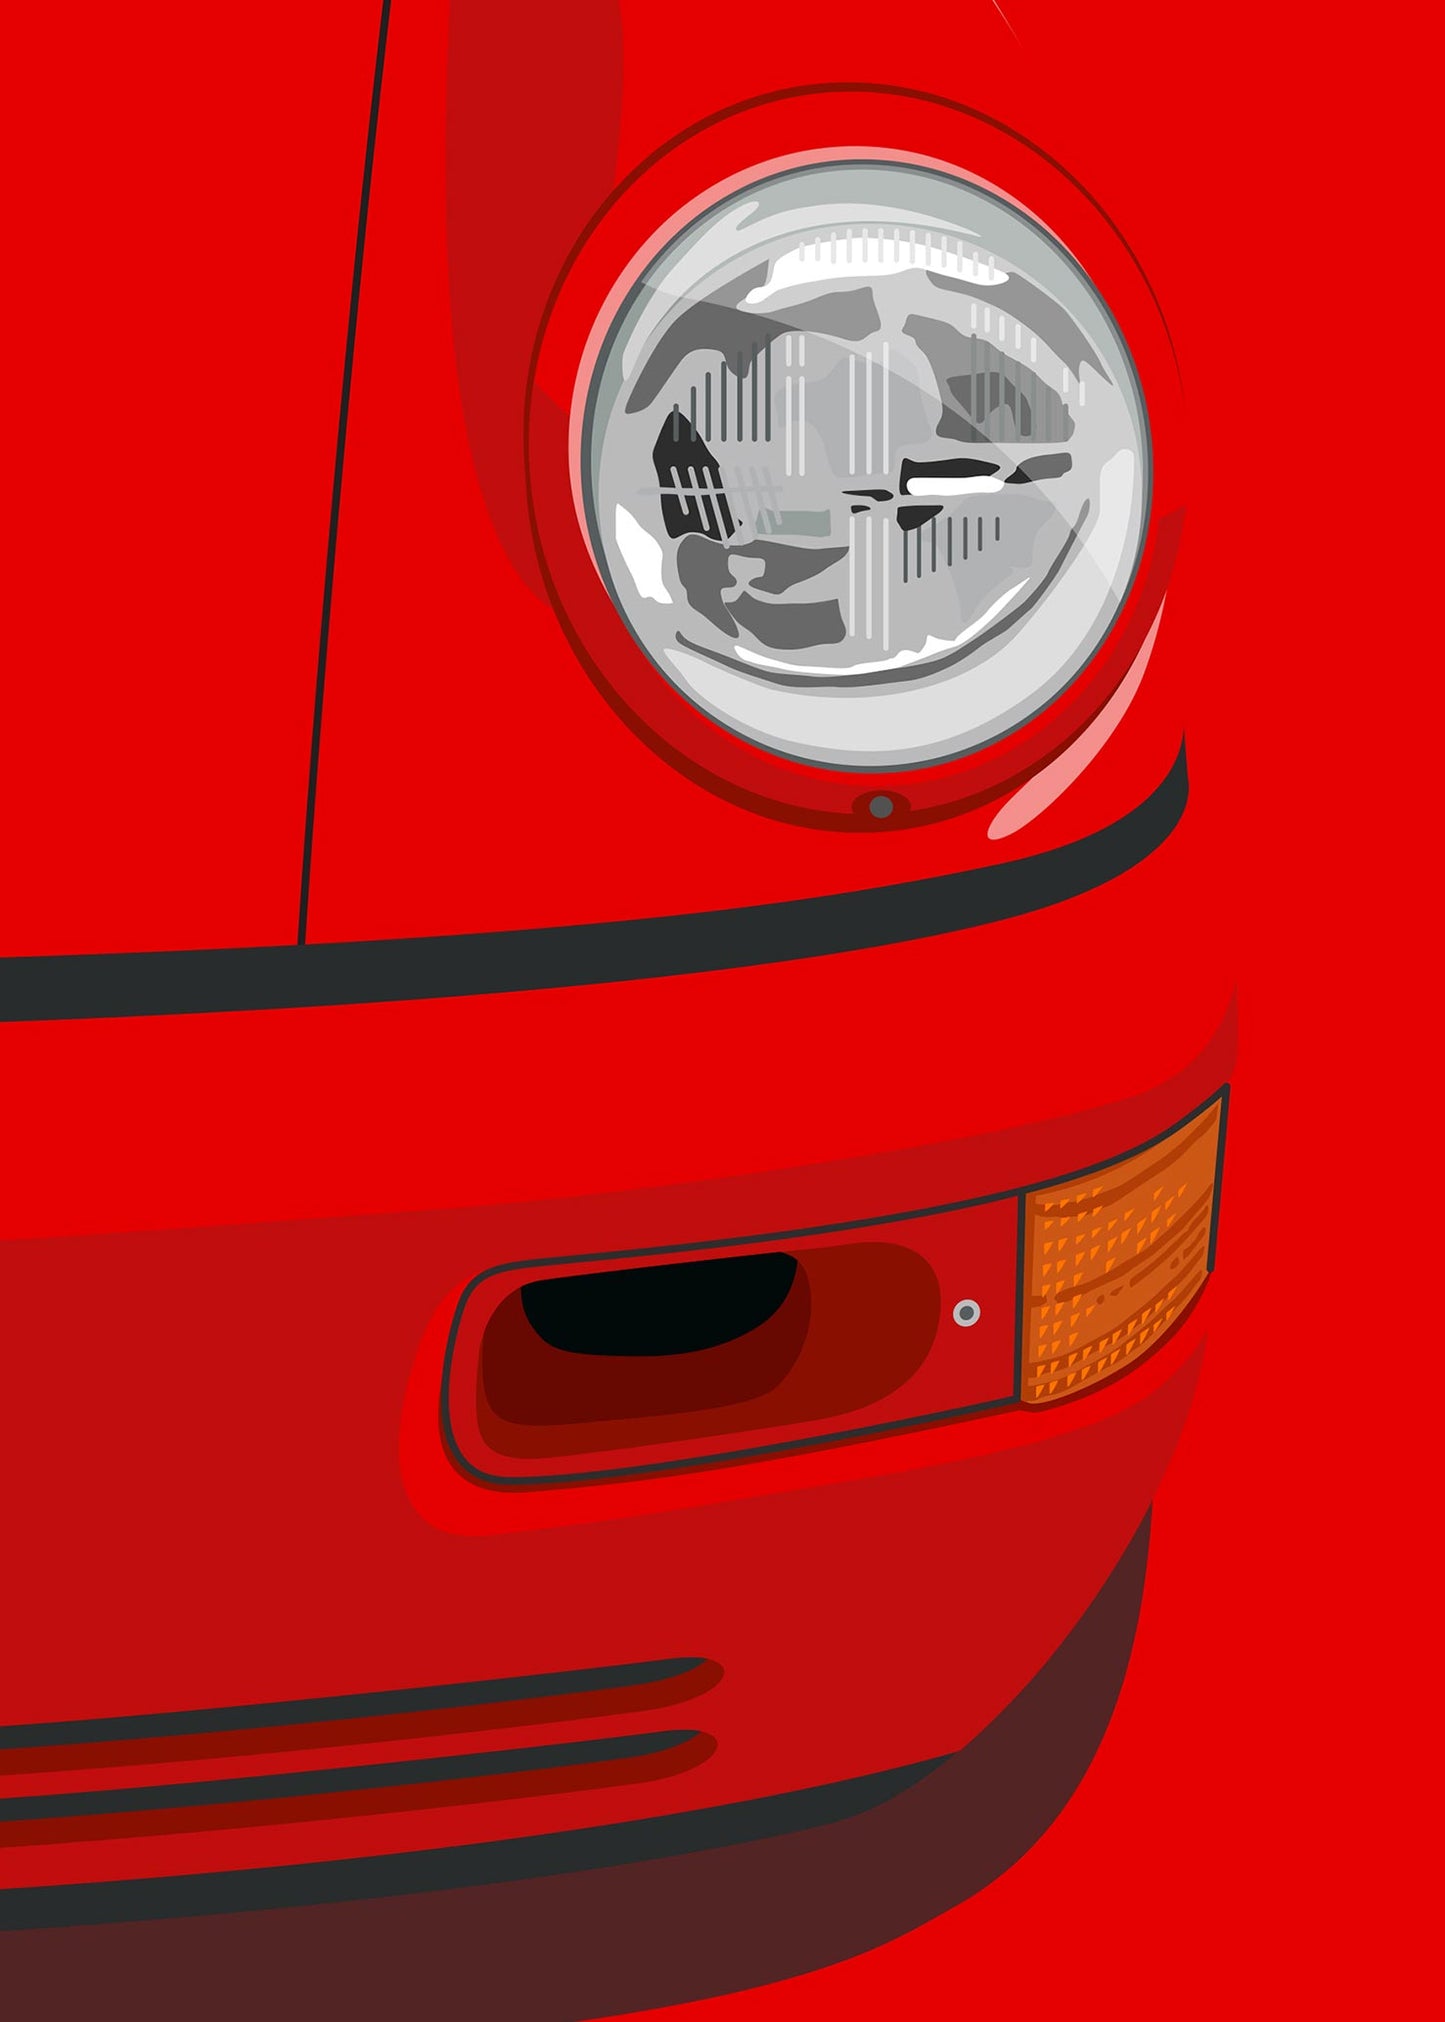 1992 Porsche 911 (964) Carrera RS Guards Red - poster print